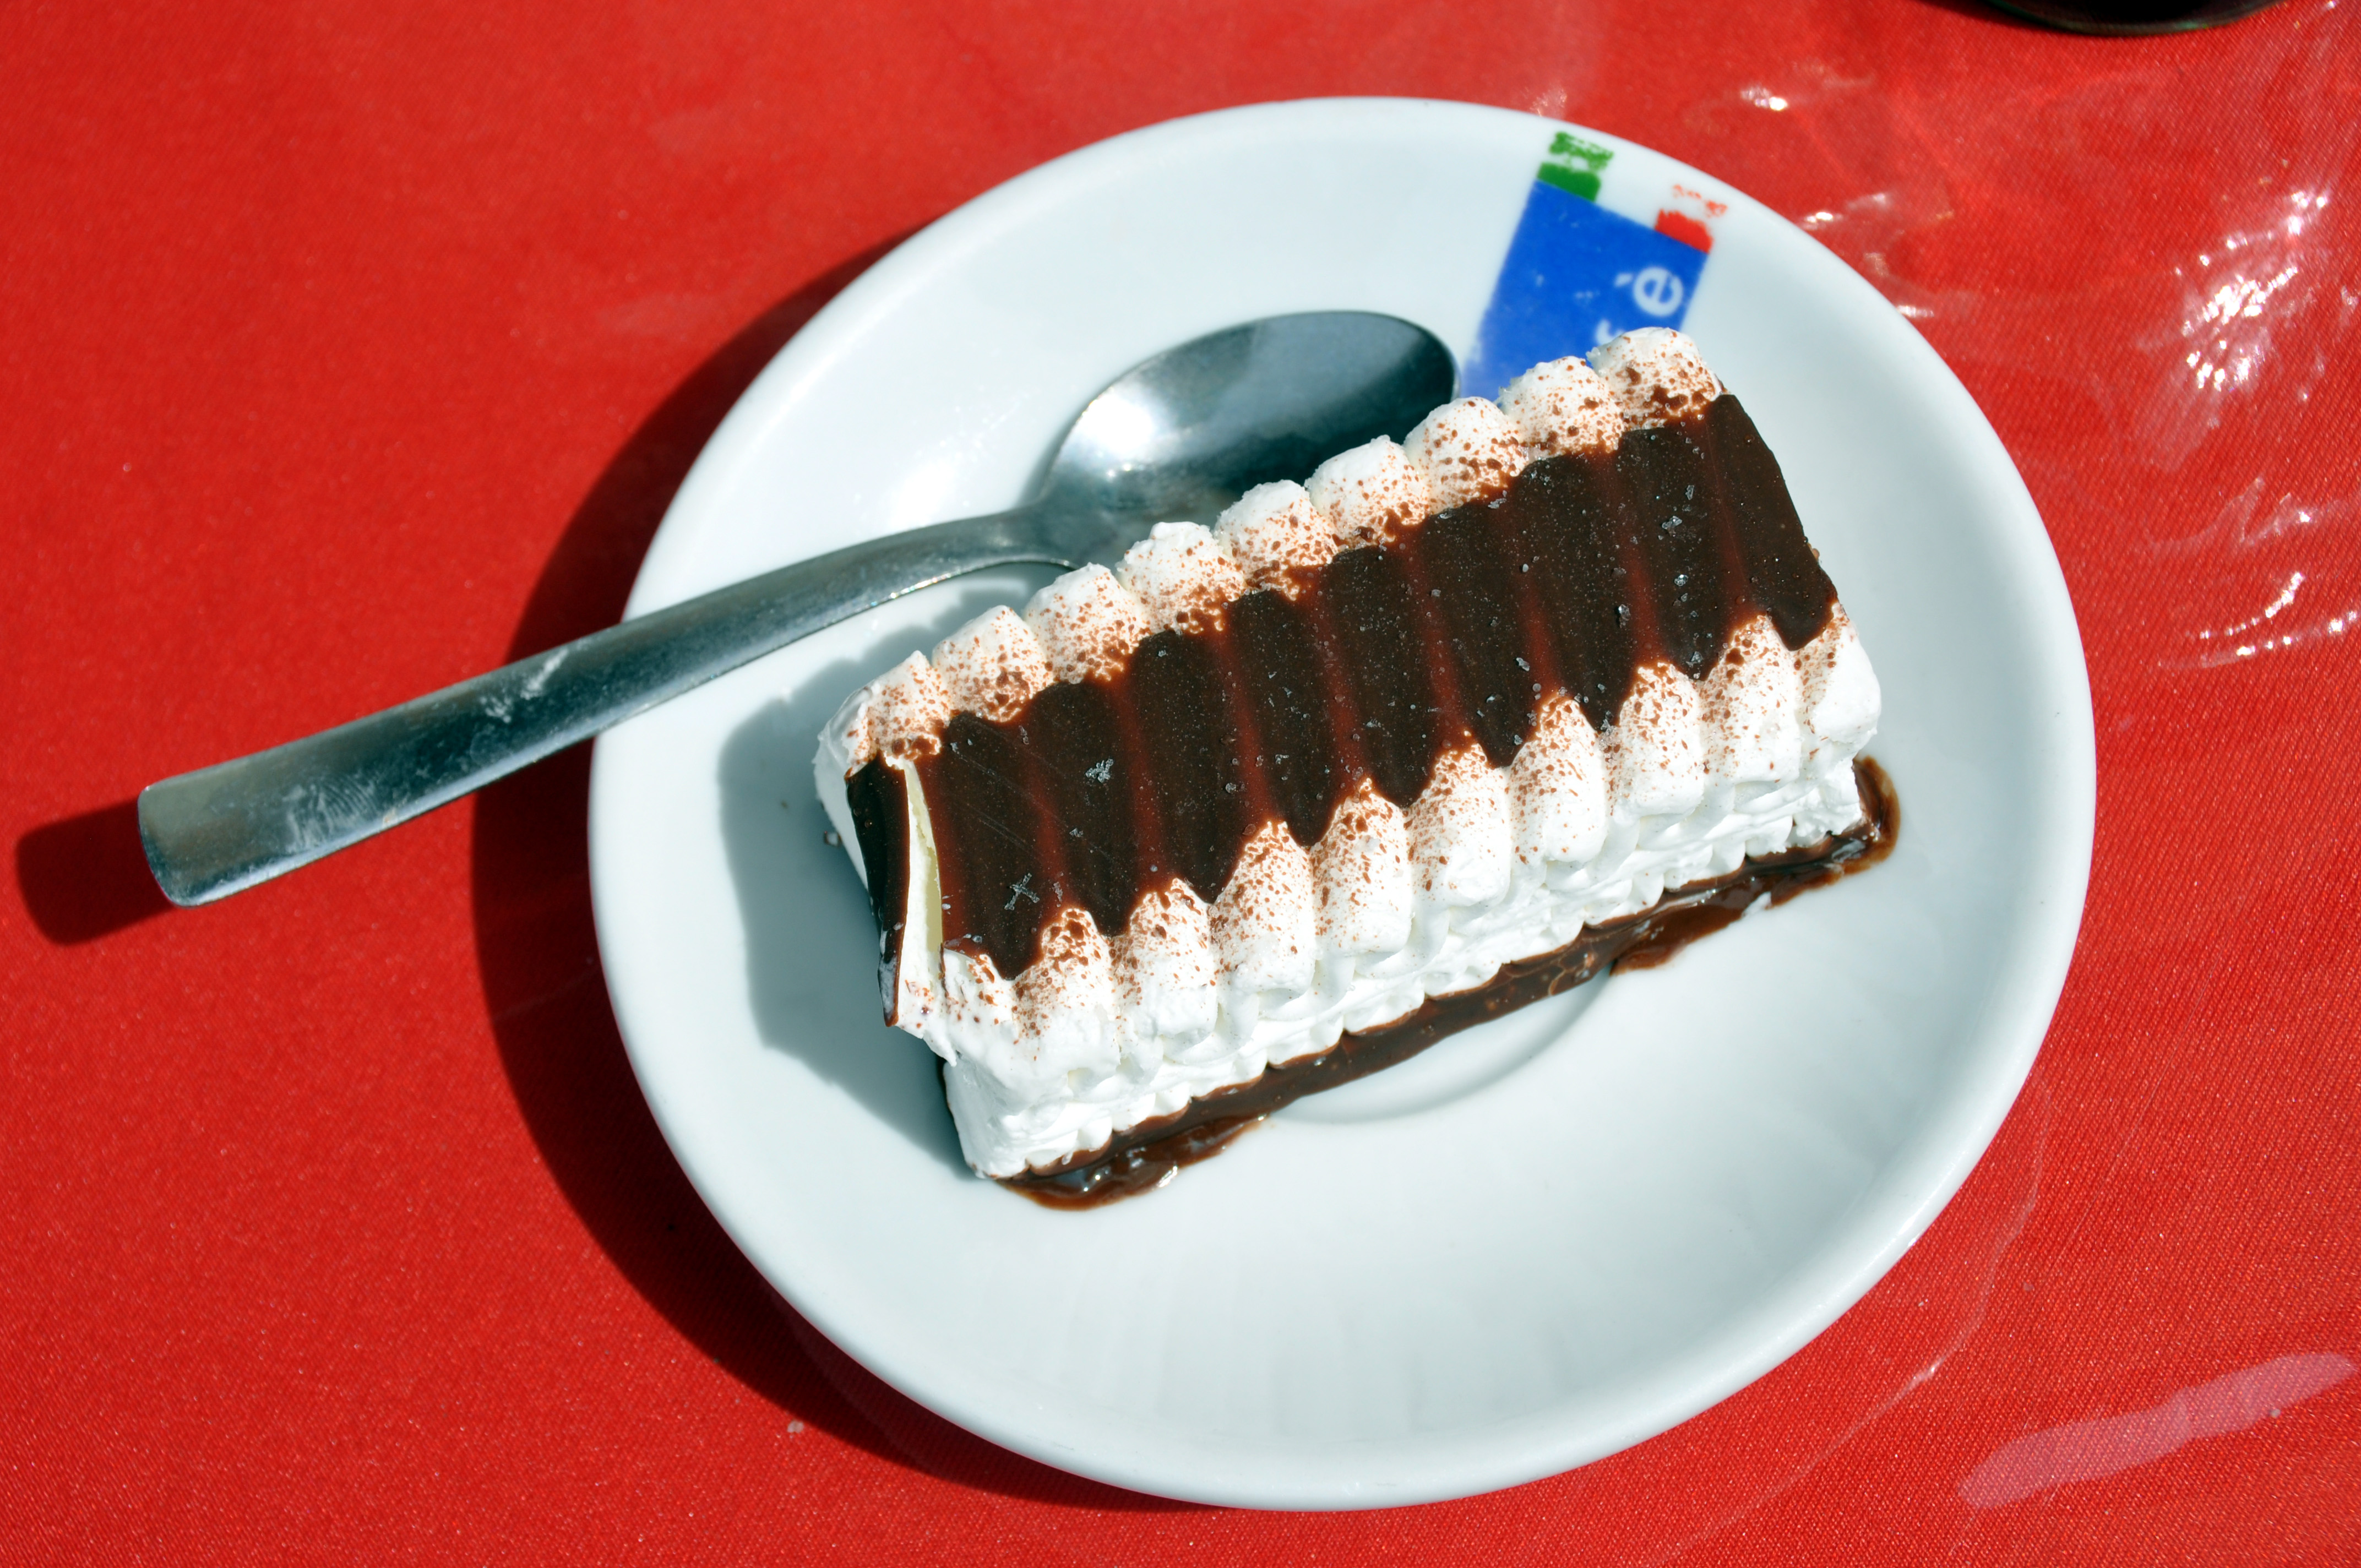 A Viennetta ice cream cake on a white plate